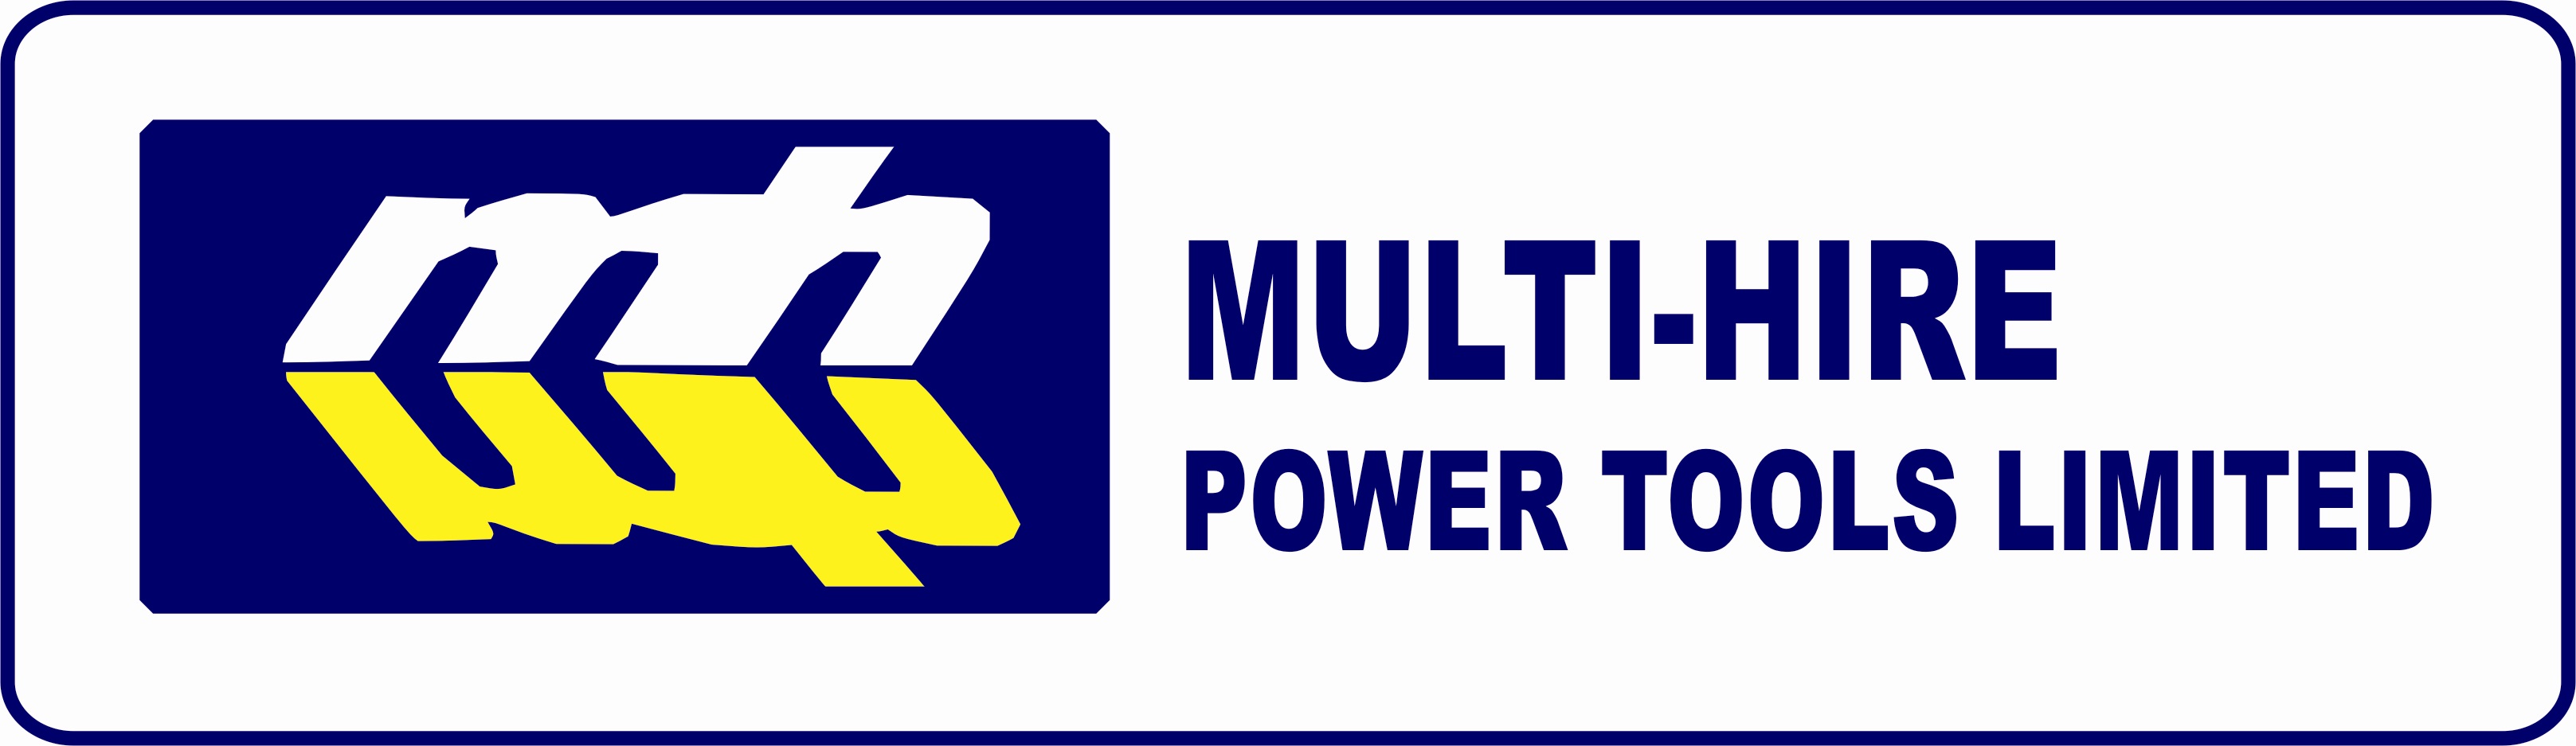 Multi Hire Power Tools Ltd